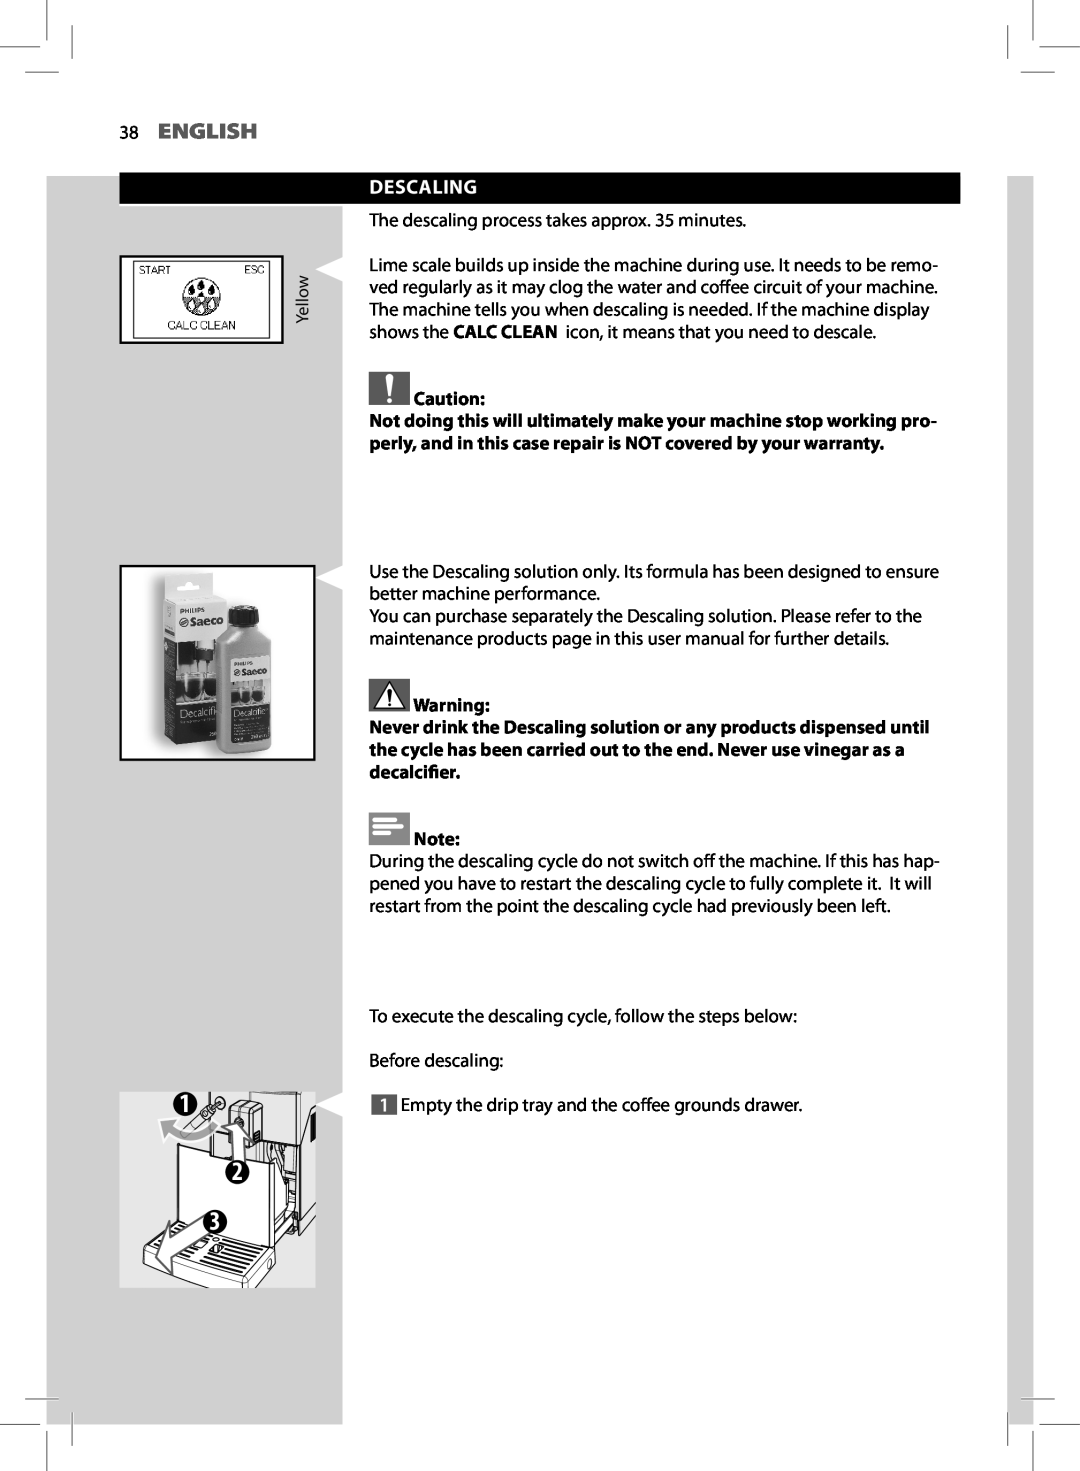 Saeco Coffee Makers HD8764, HD8761 manual English, Descaling 